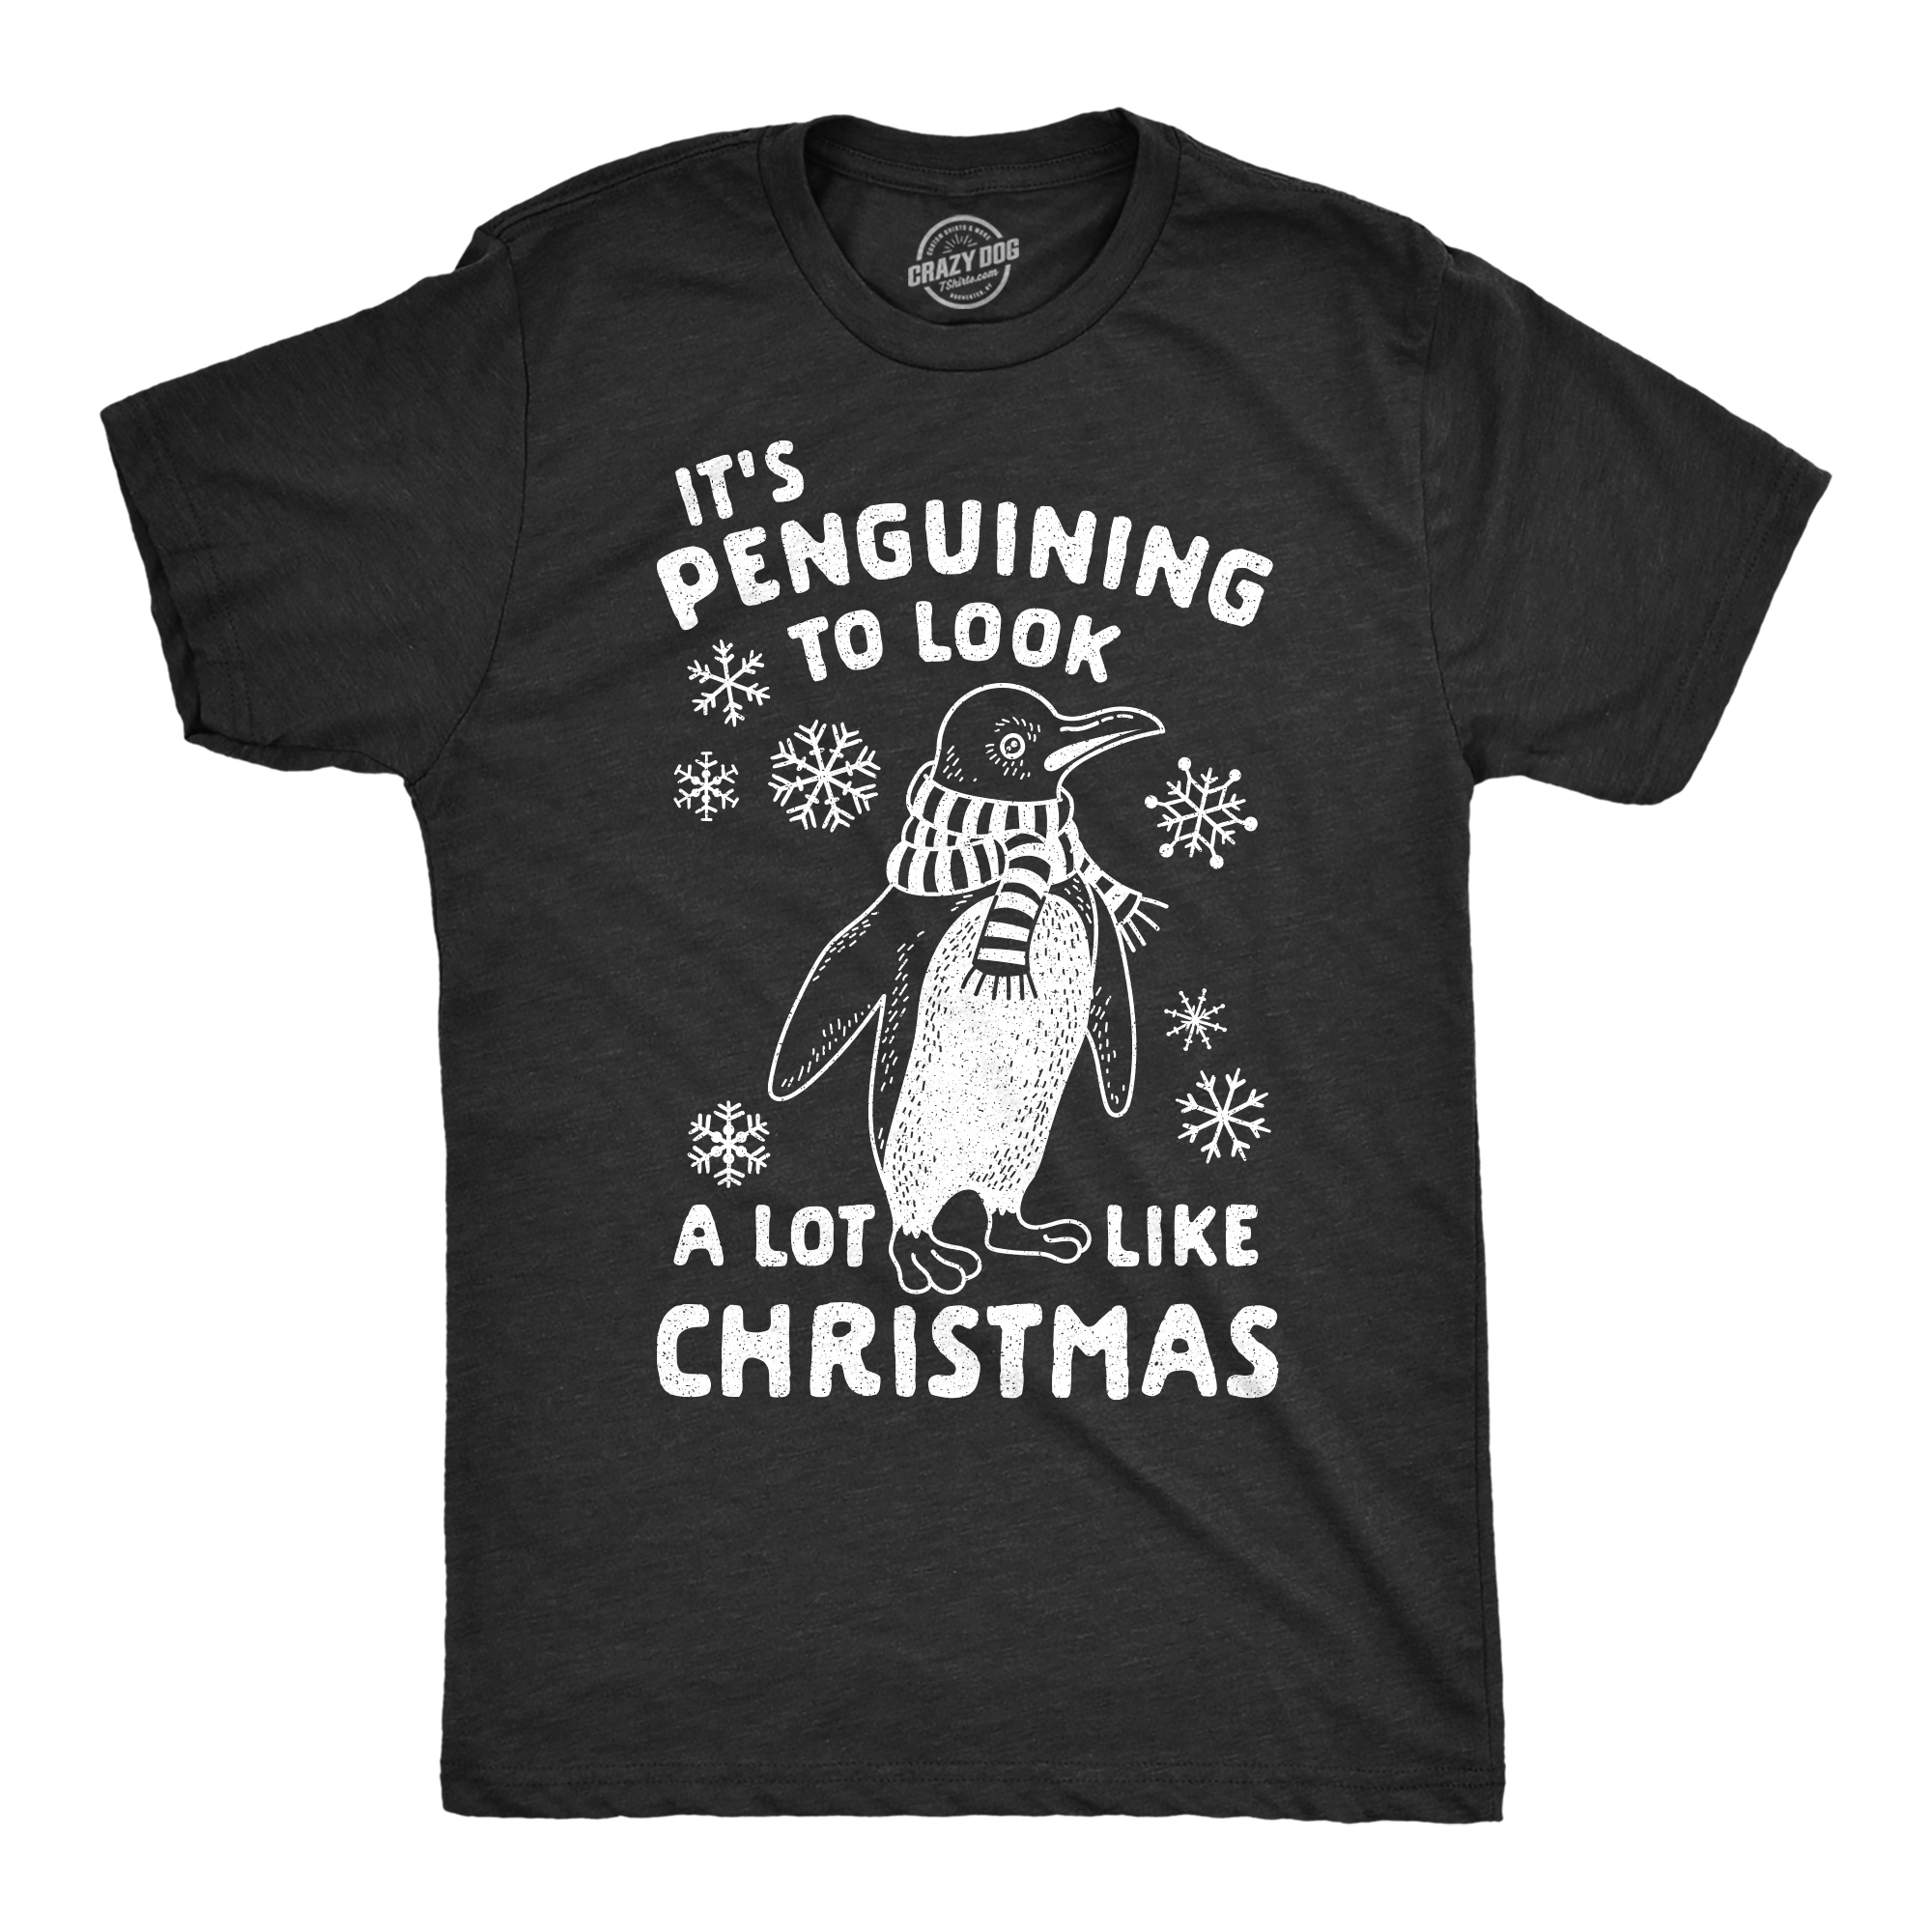 Crazy Dog Tshirts Mens It's Penguining To Look A Lot Like Christmas Tshirt Funny Holiday Penguin Xmas Tee